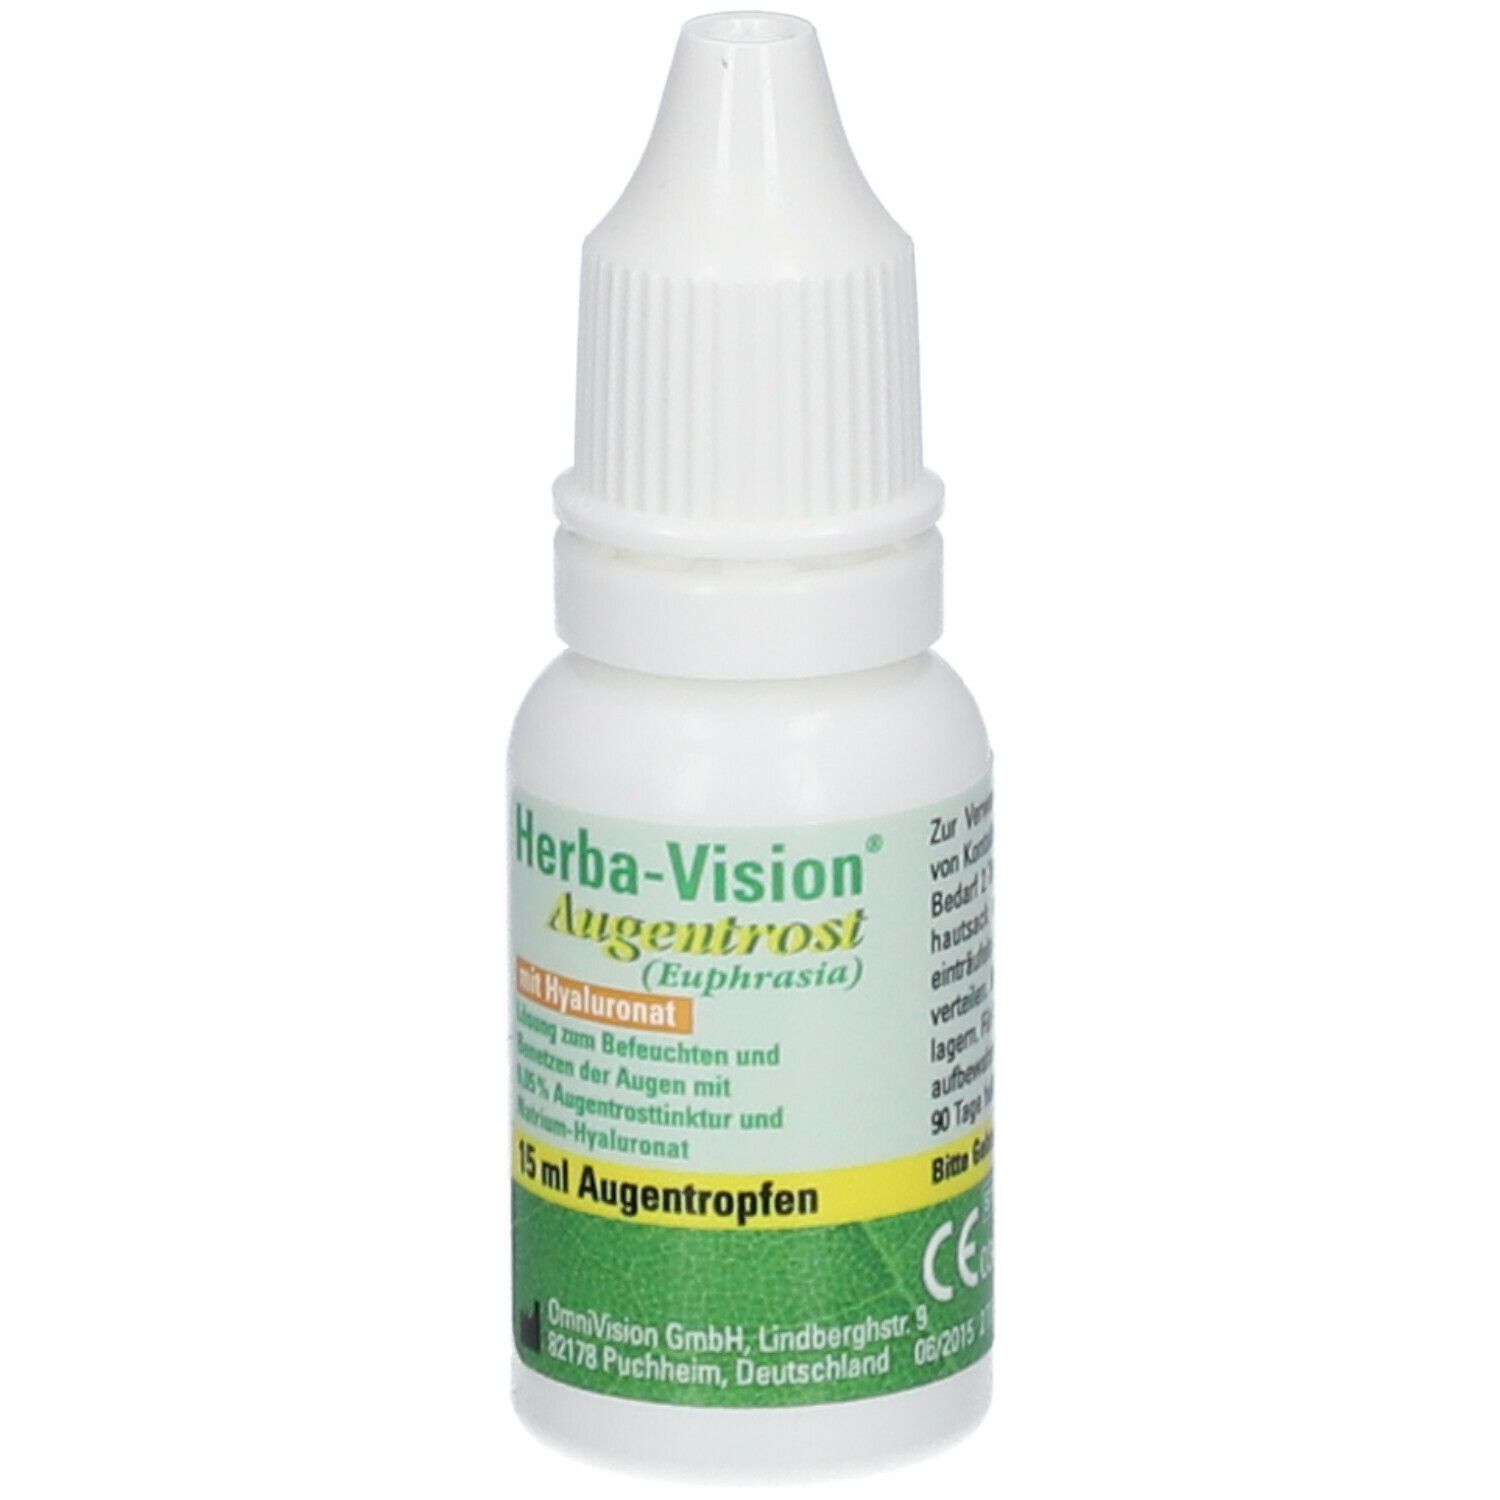 Herba-Vision® Augentrost